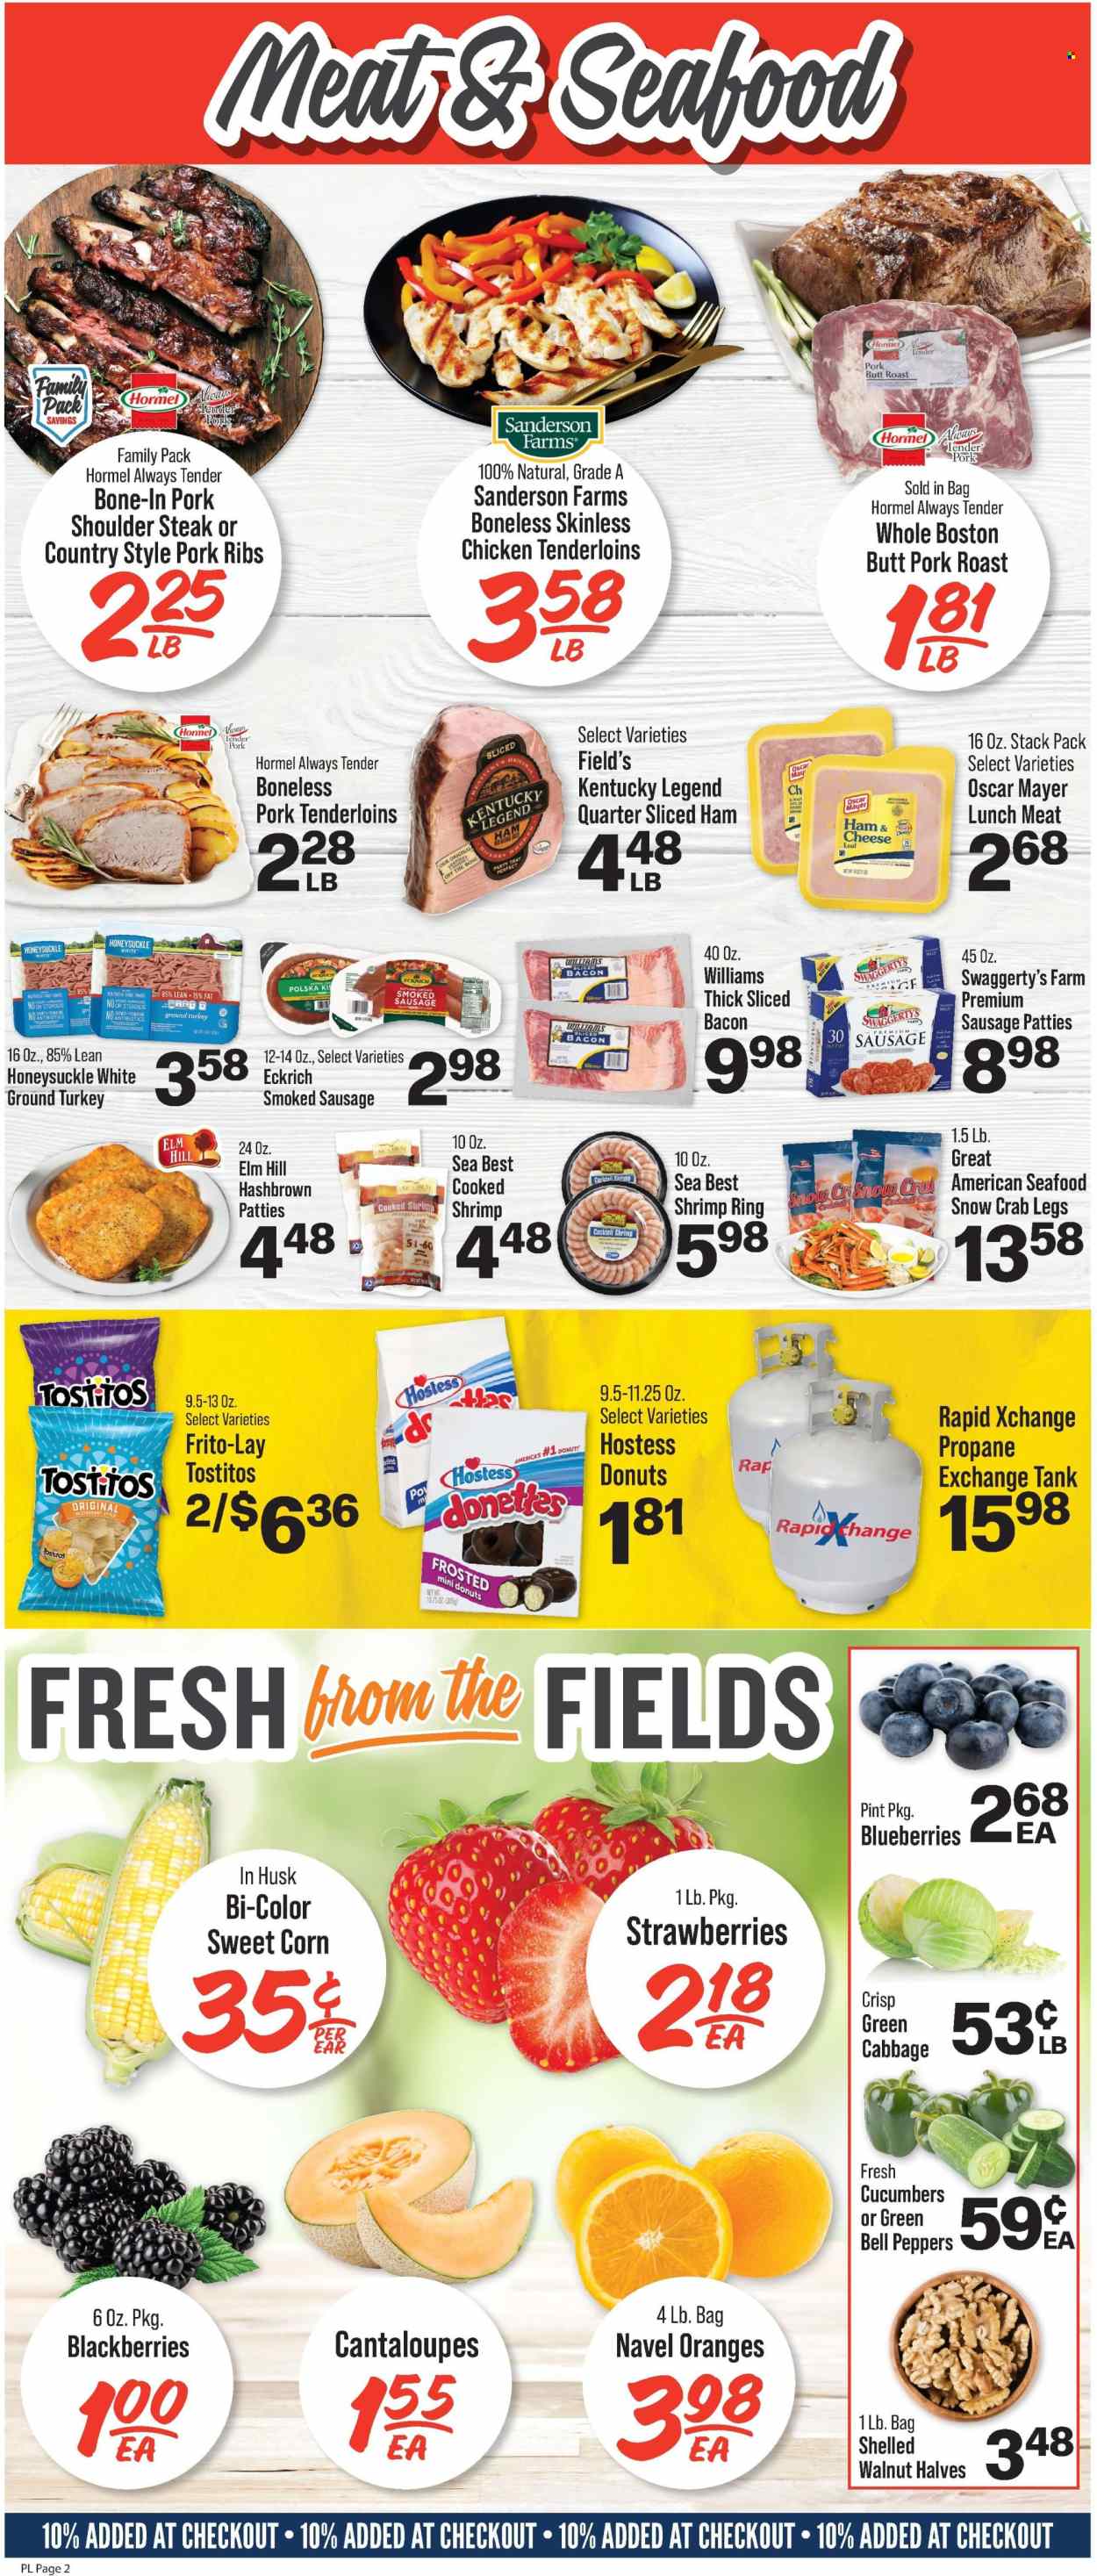 Price Less Foods ad  - 04.24.2024 - 04.30.2024.